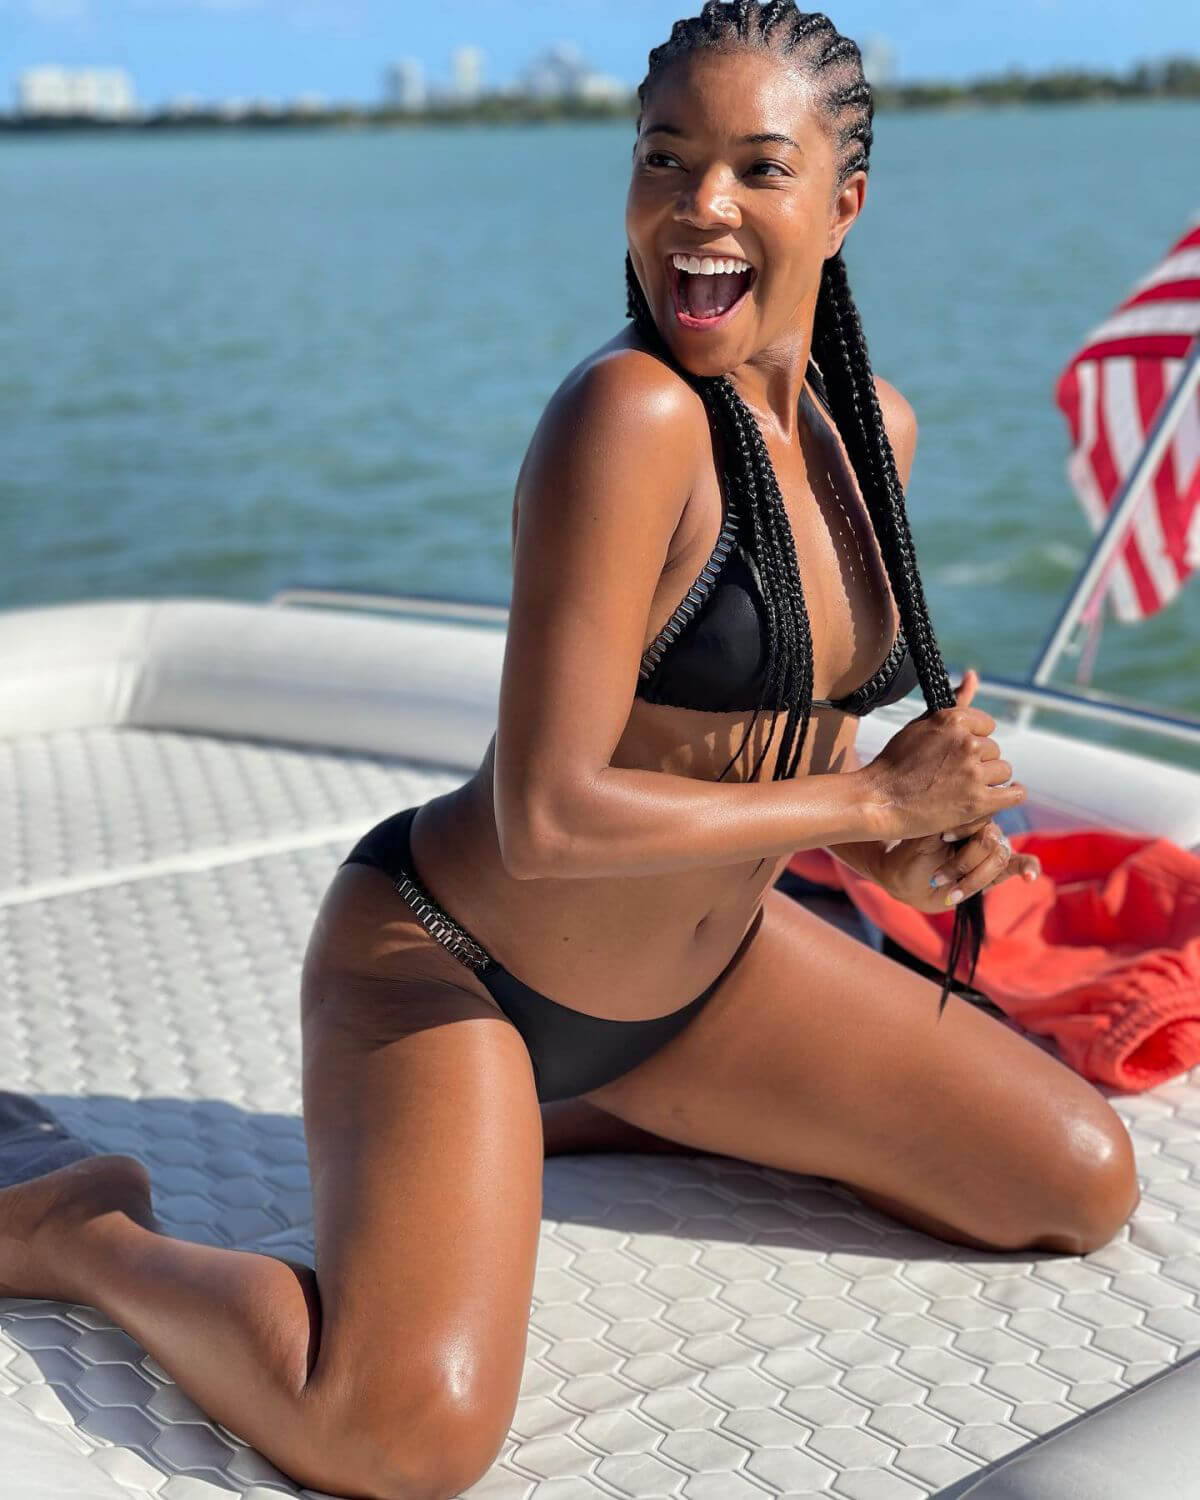 Gabrielle Union Enjoys in Bikinis at a Boat 03/12/2021 6